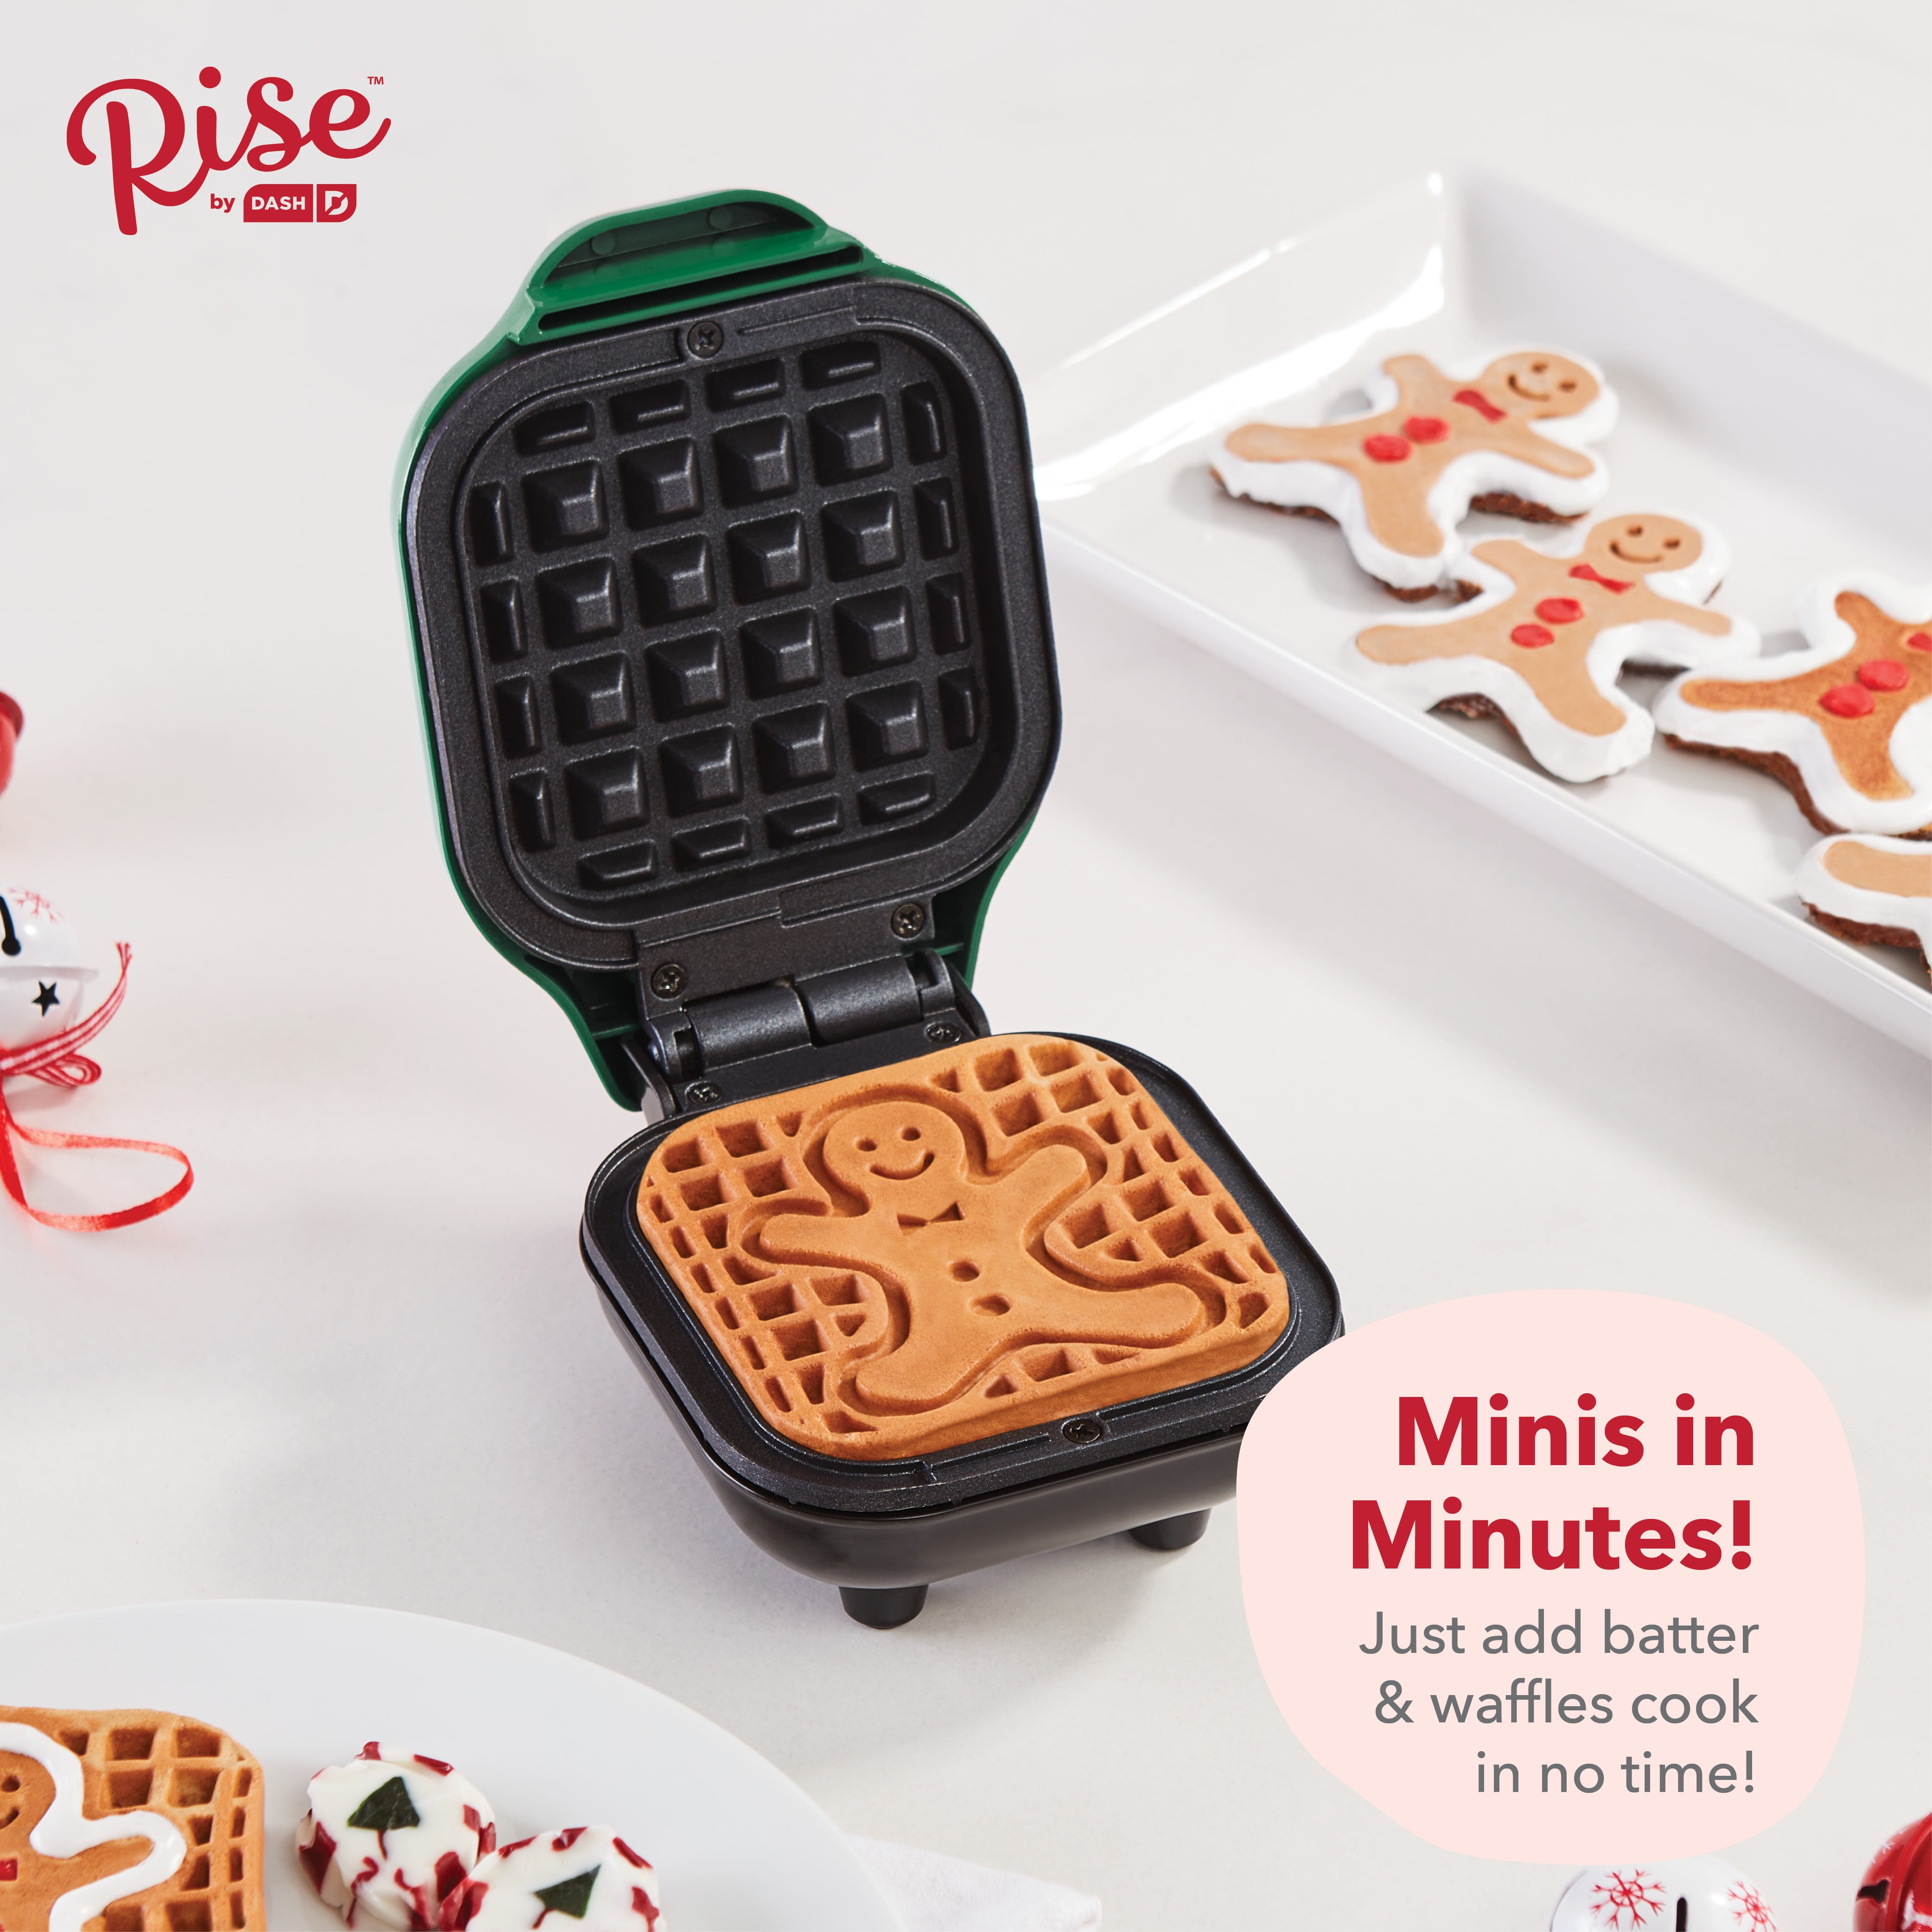 Dash Mini Gingerbread Waffle Maker